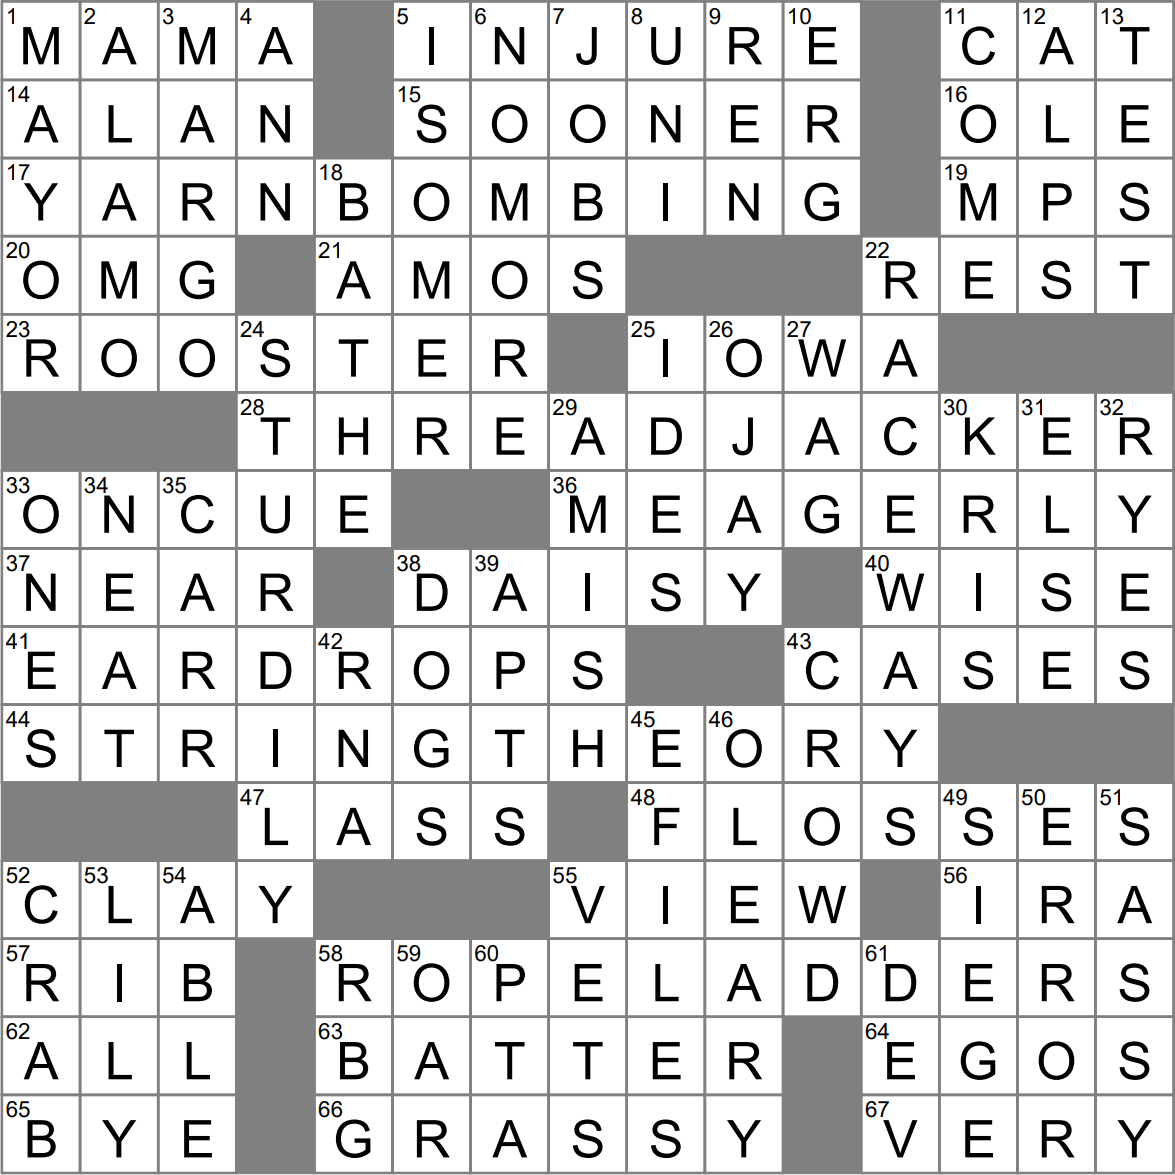 LA Times Crossword 1 May 23 Monday LAXCrossword com